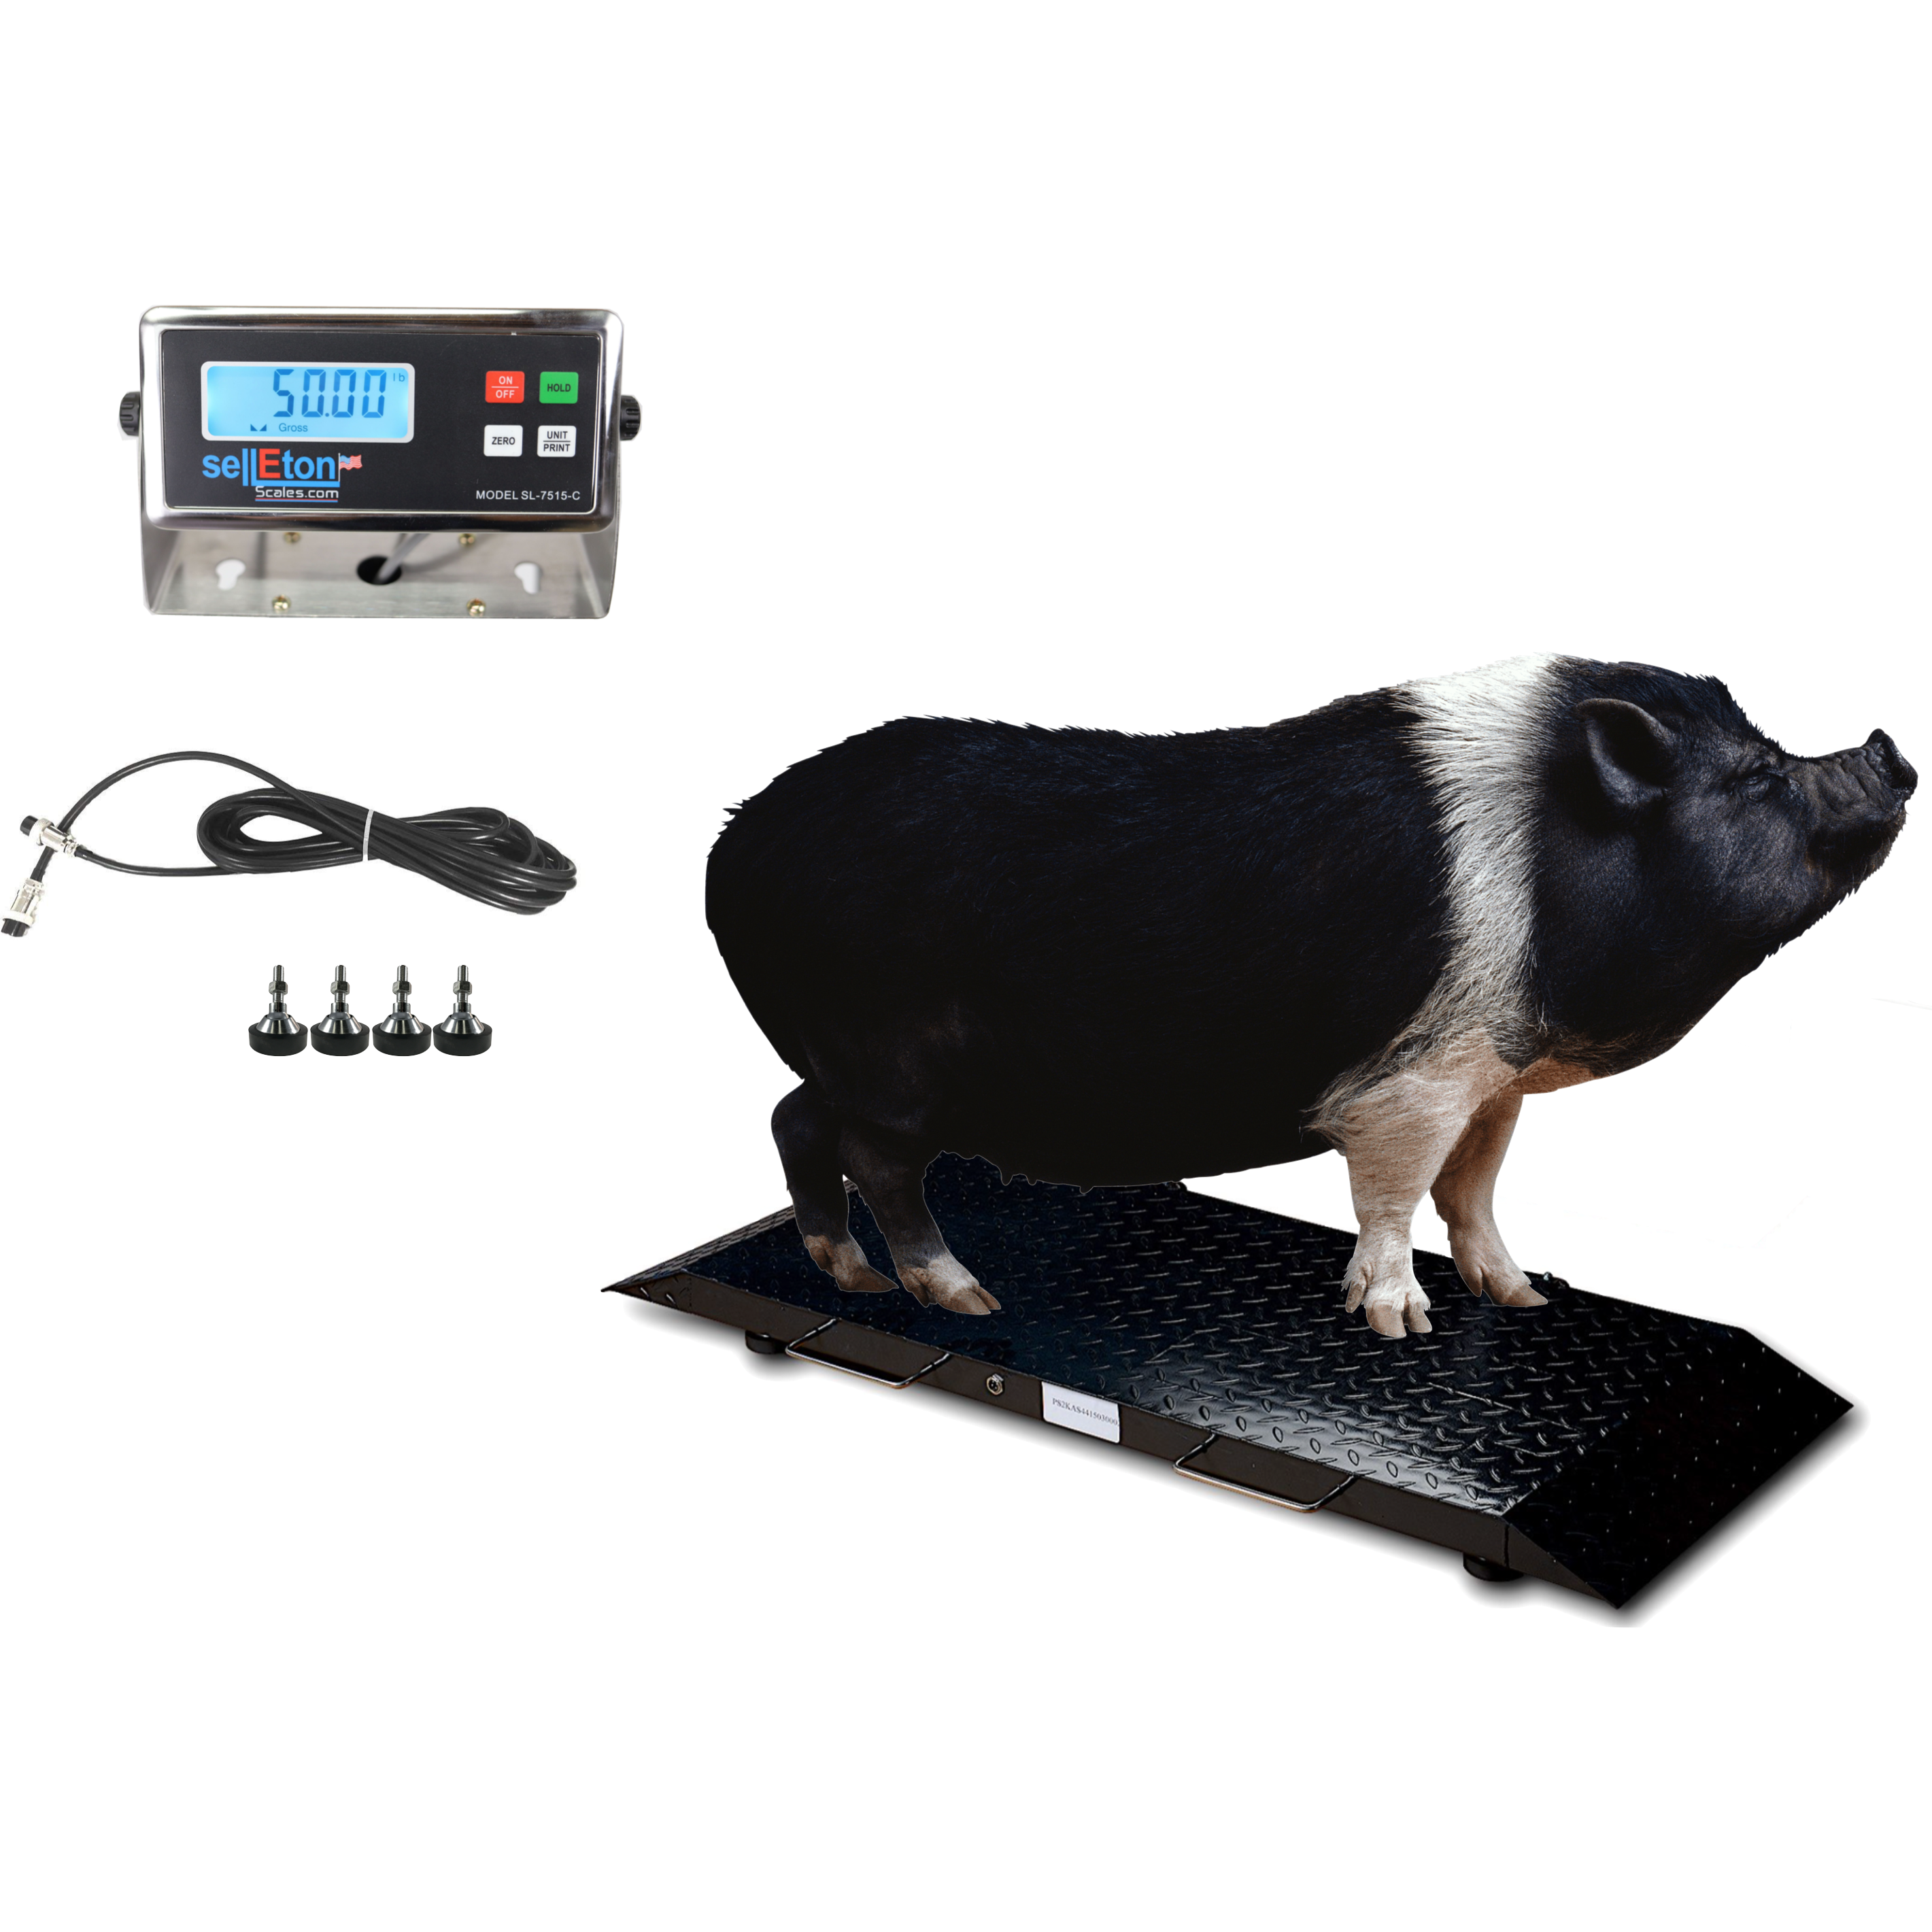 Copy of PEC Scales 700lbs Vet Animal Scale/Farm Livestock Scale